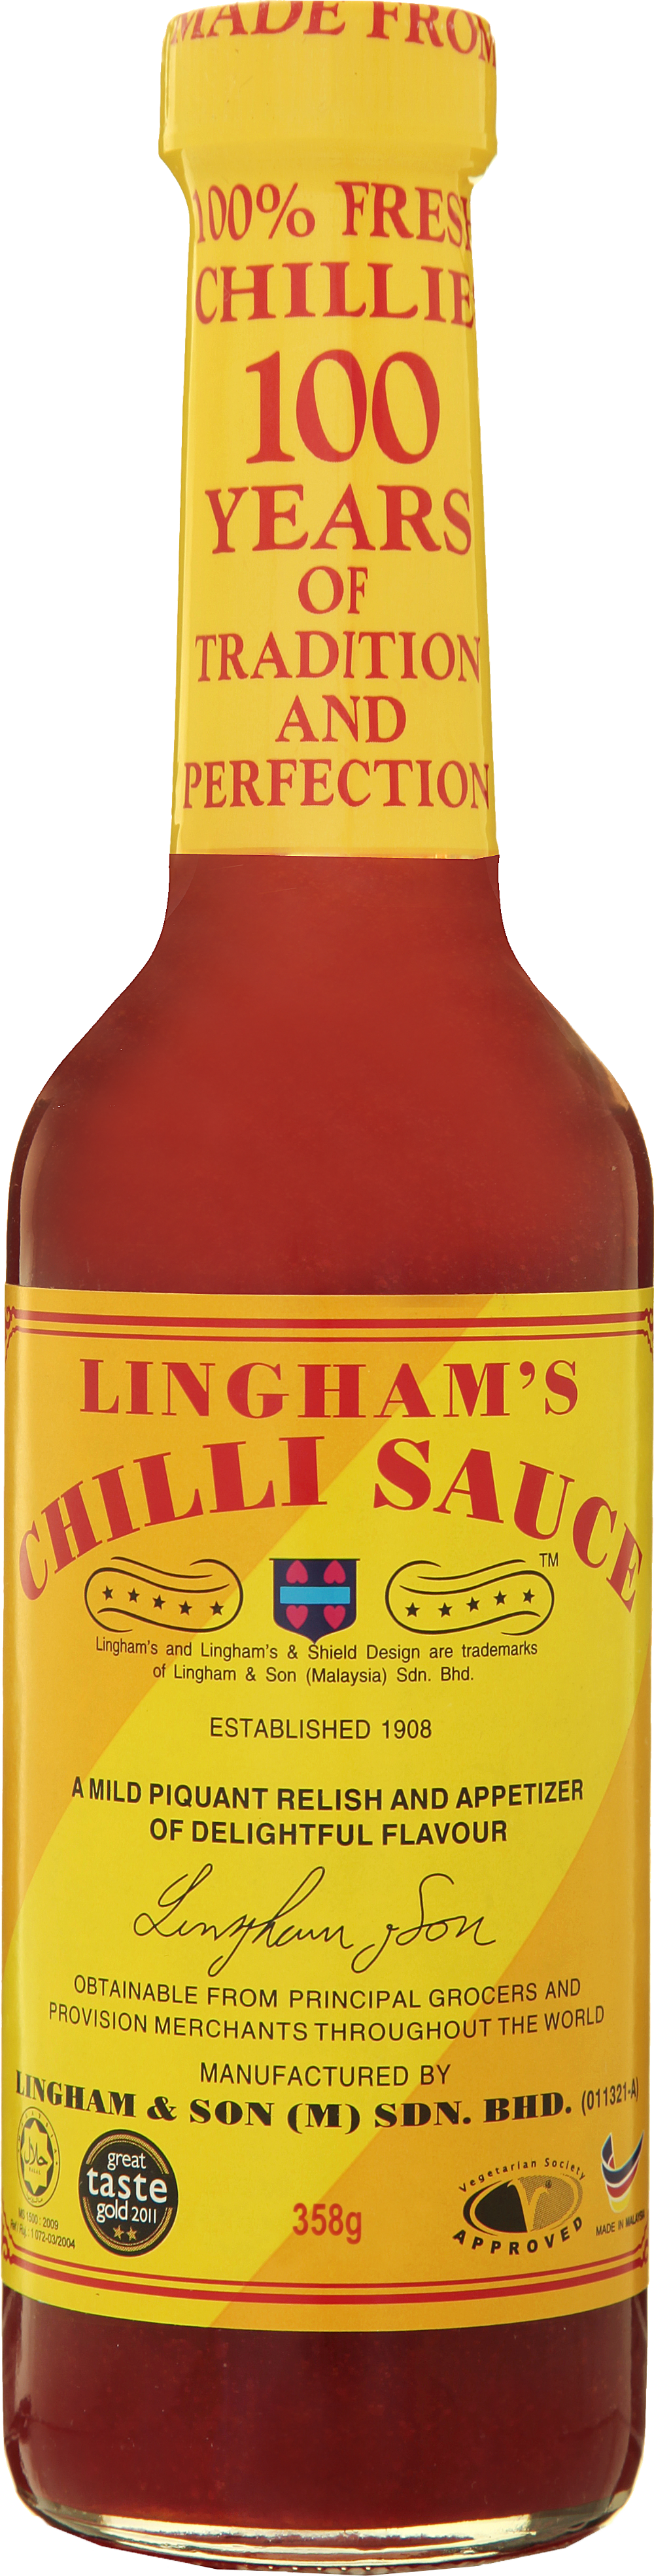 LINGHAM'S Chilli Sauce 358g